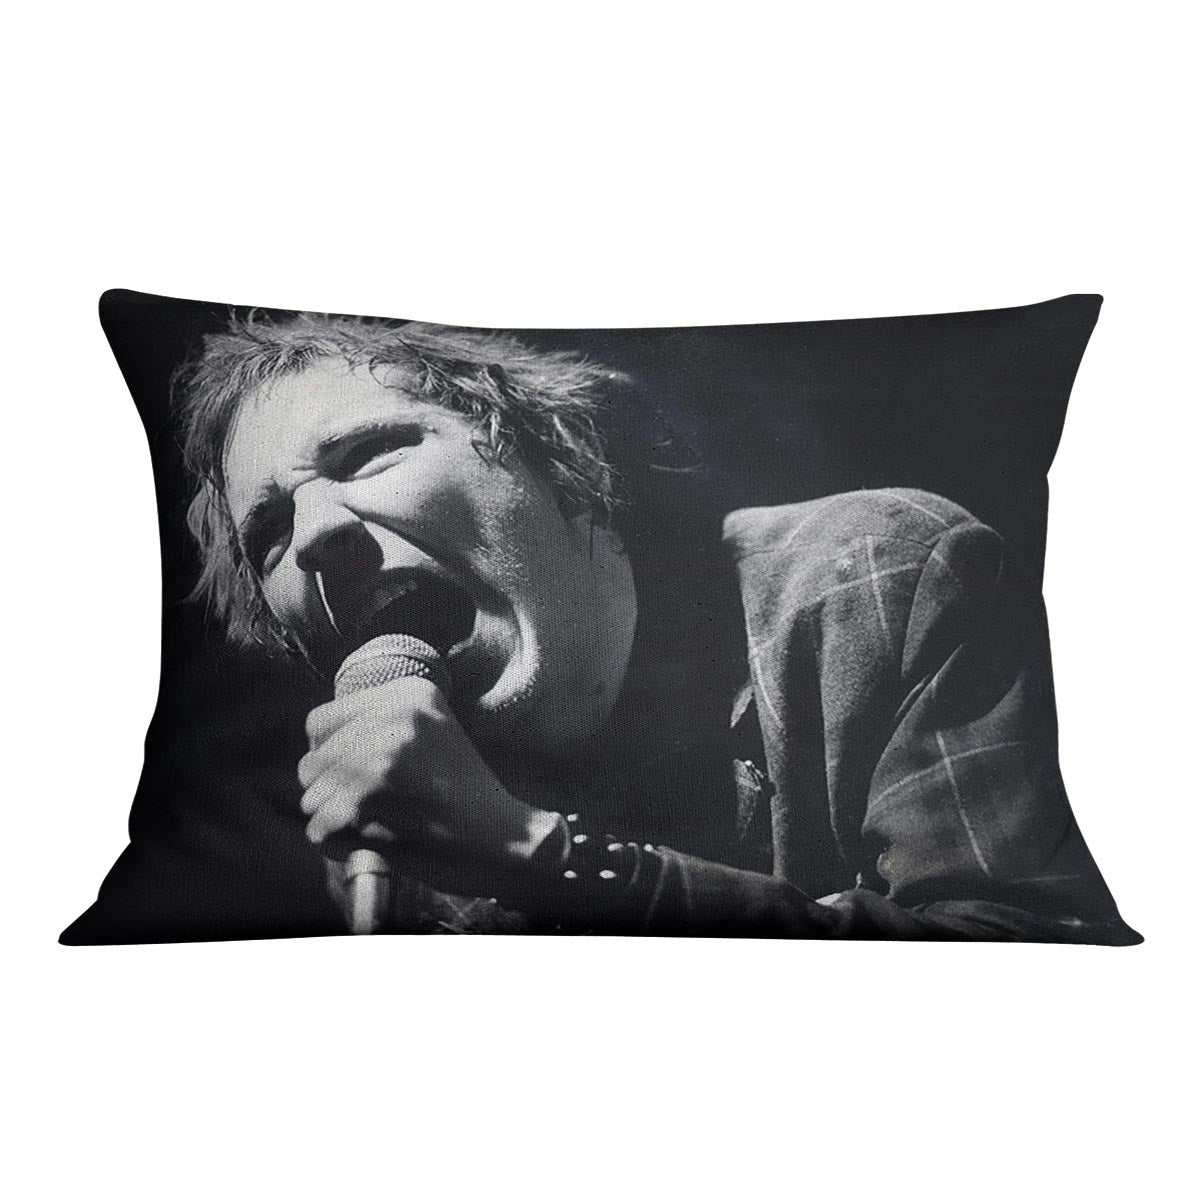 Johnny Rotten sings Cushion